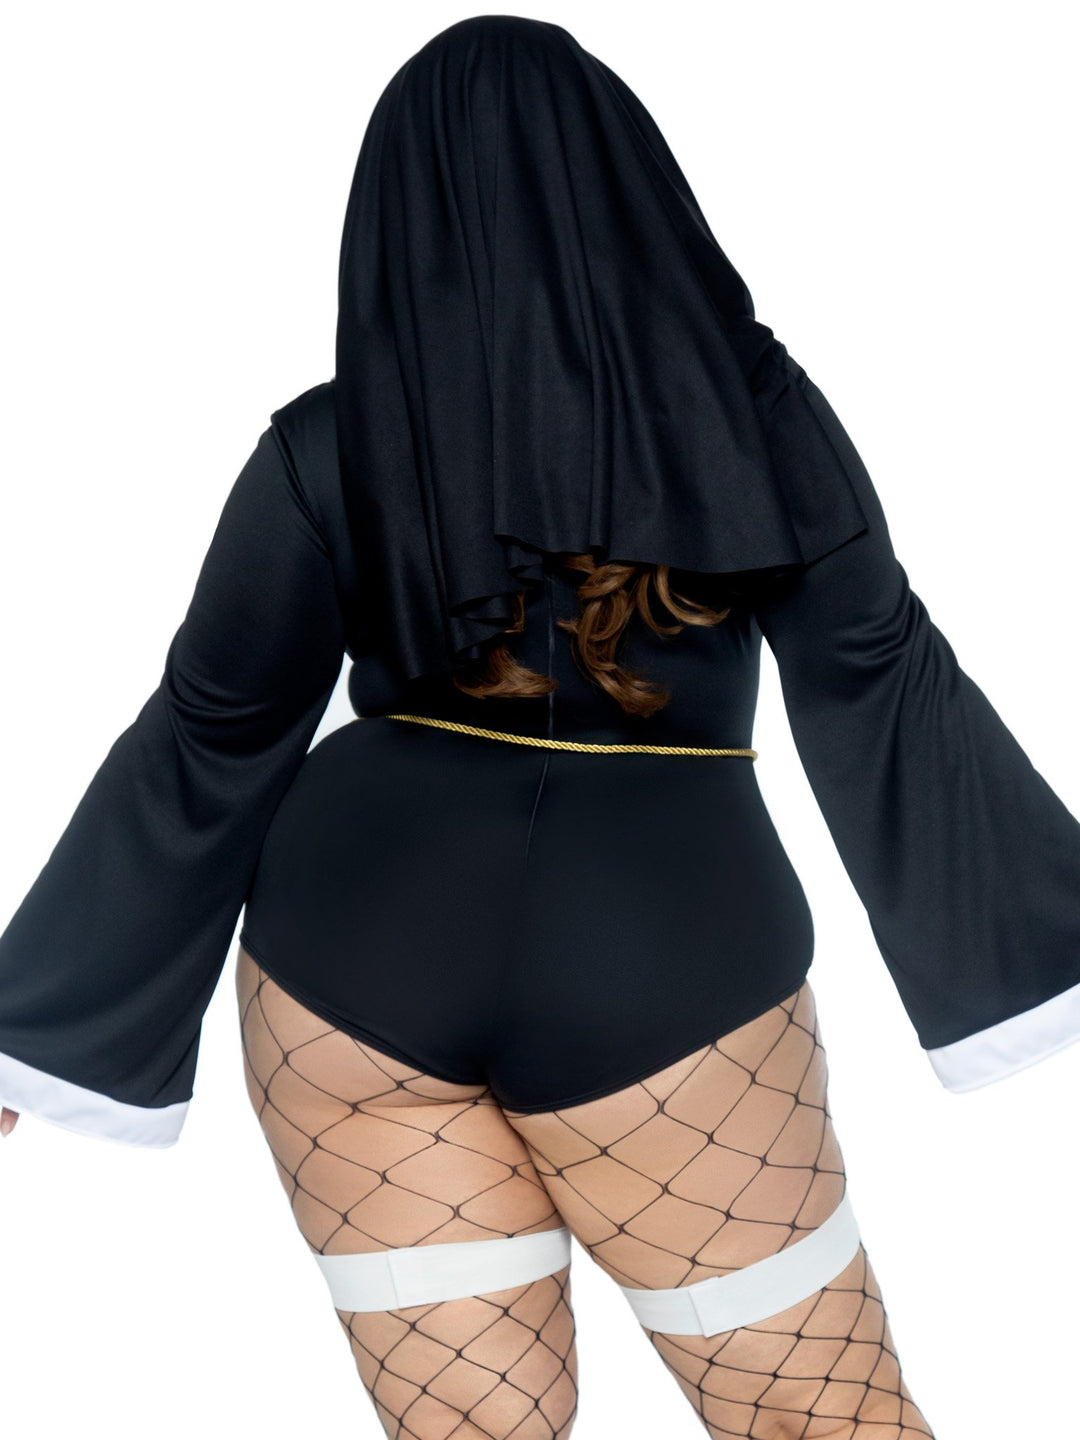 Sister Sin Nun Bell Sleeve Plus Bodysuit with Garter Leg Straps and Hat Headband